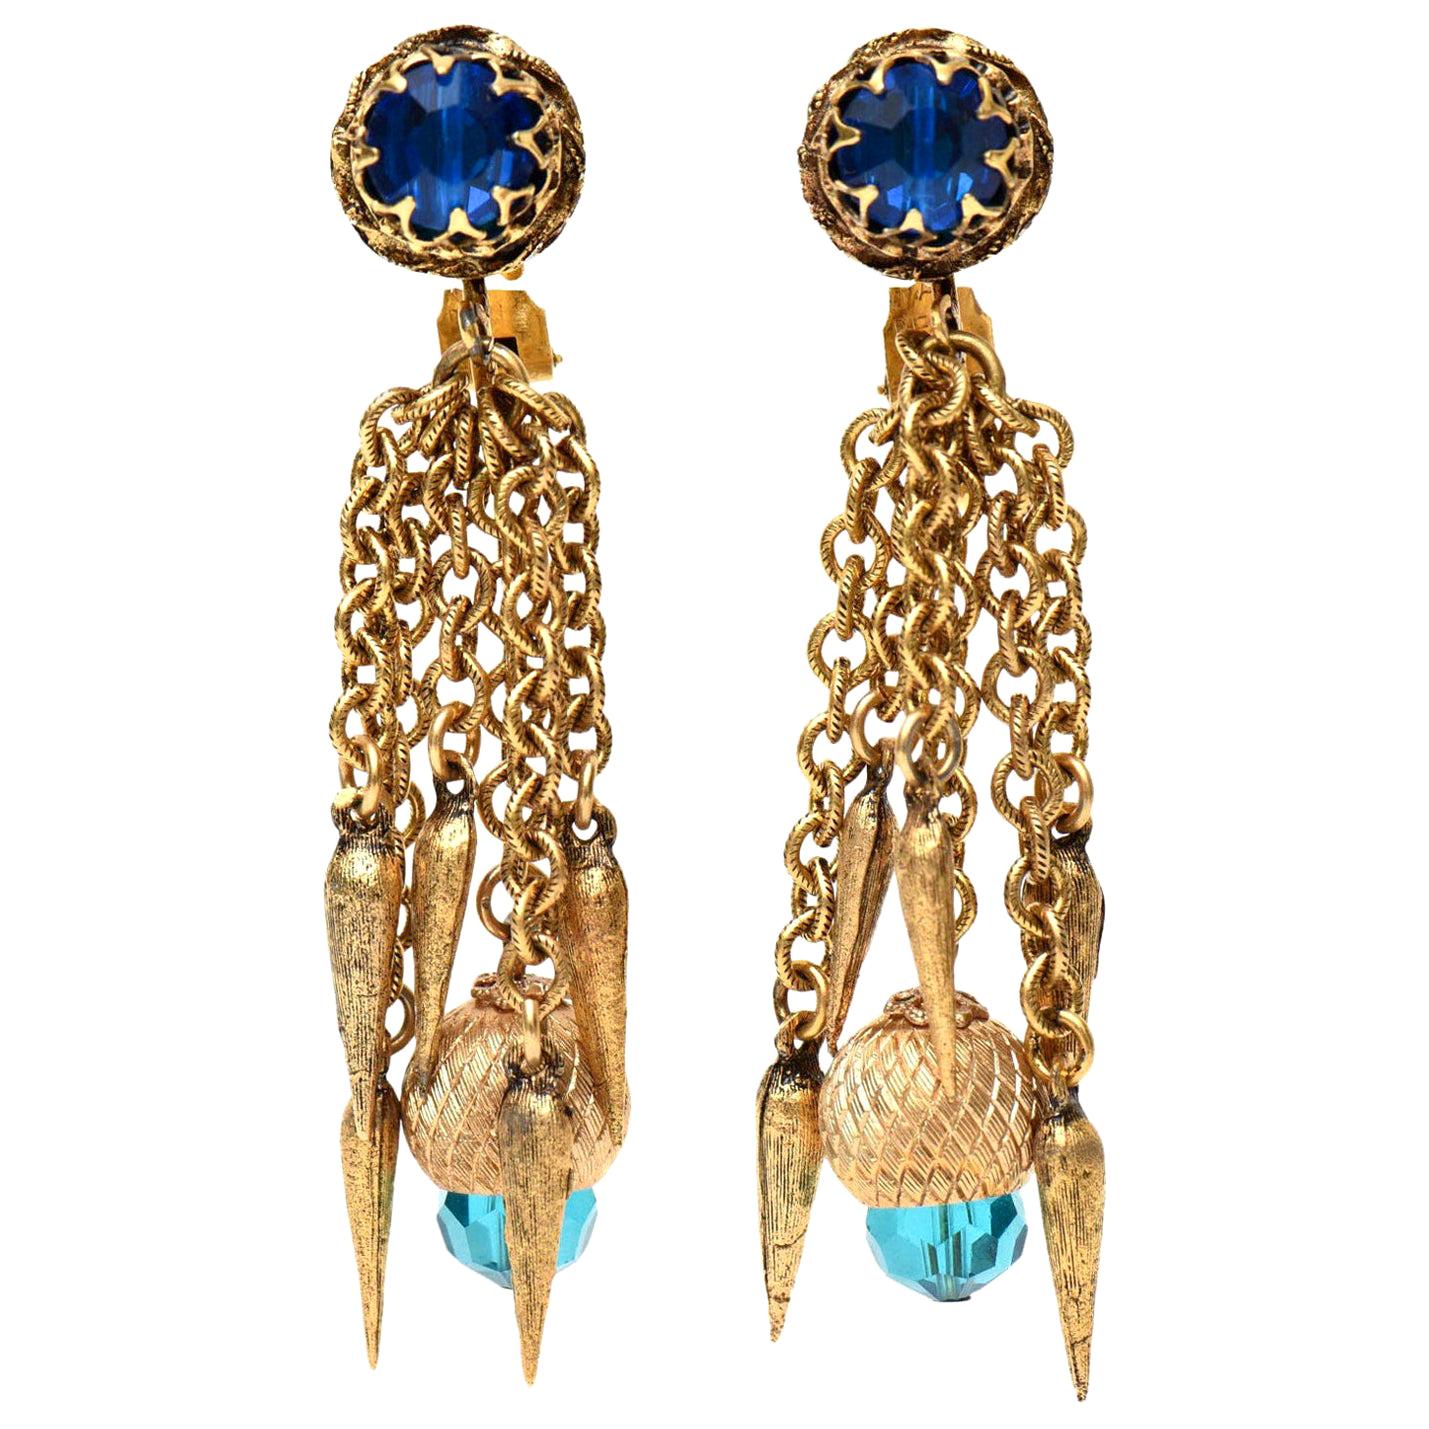 Vergoldete & türkis-blaue Kristallkette, Clip-On-Ohrringe, 60er Jahre